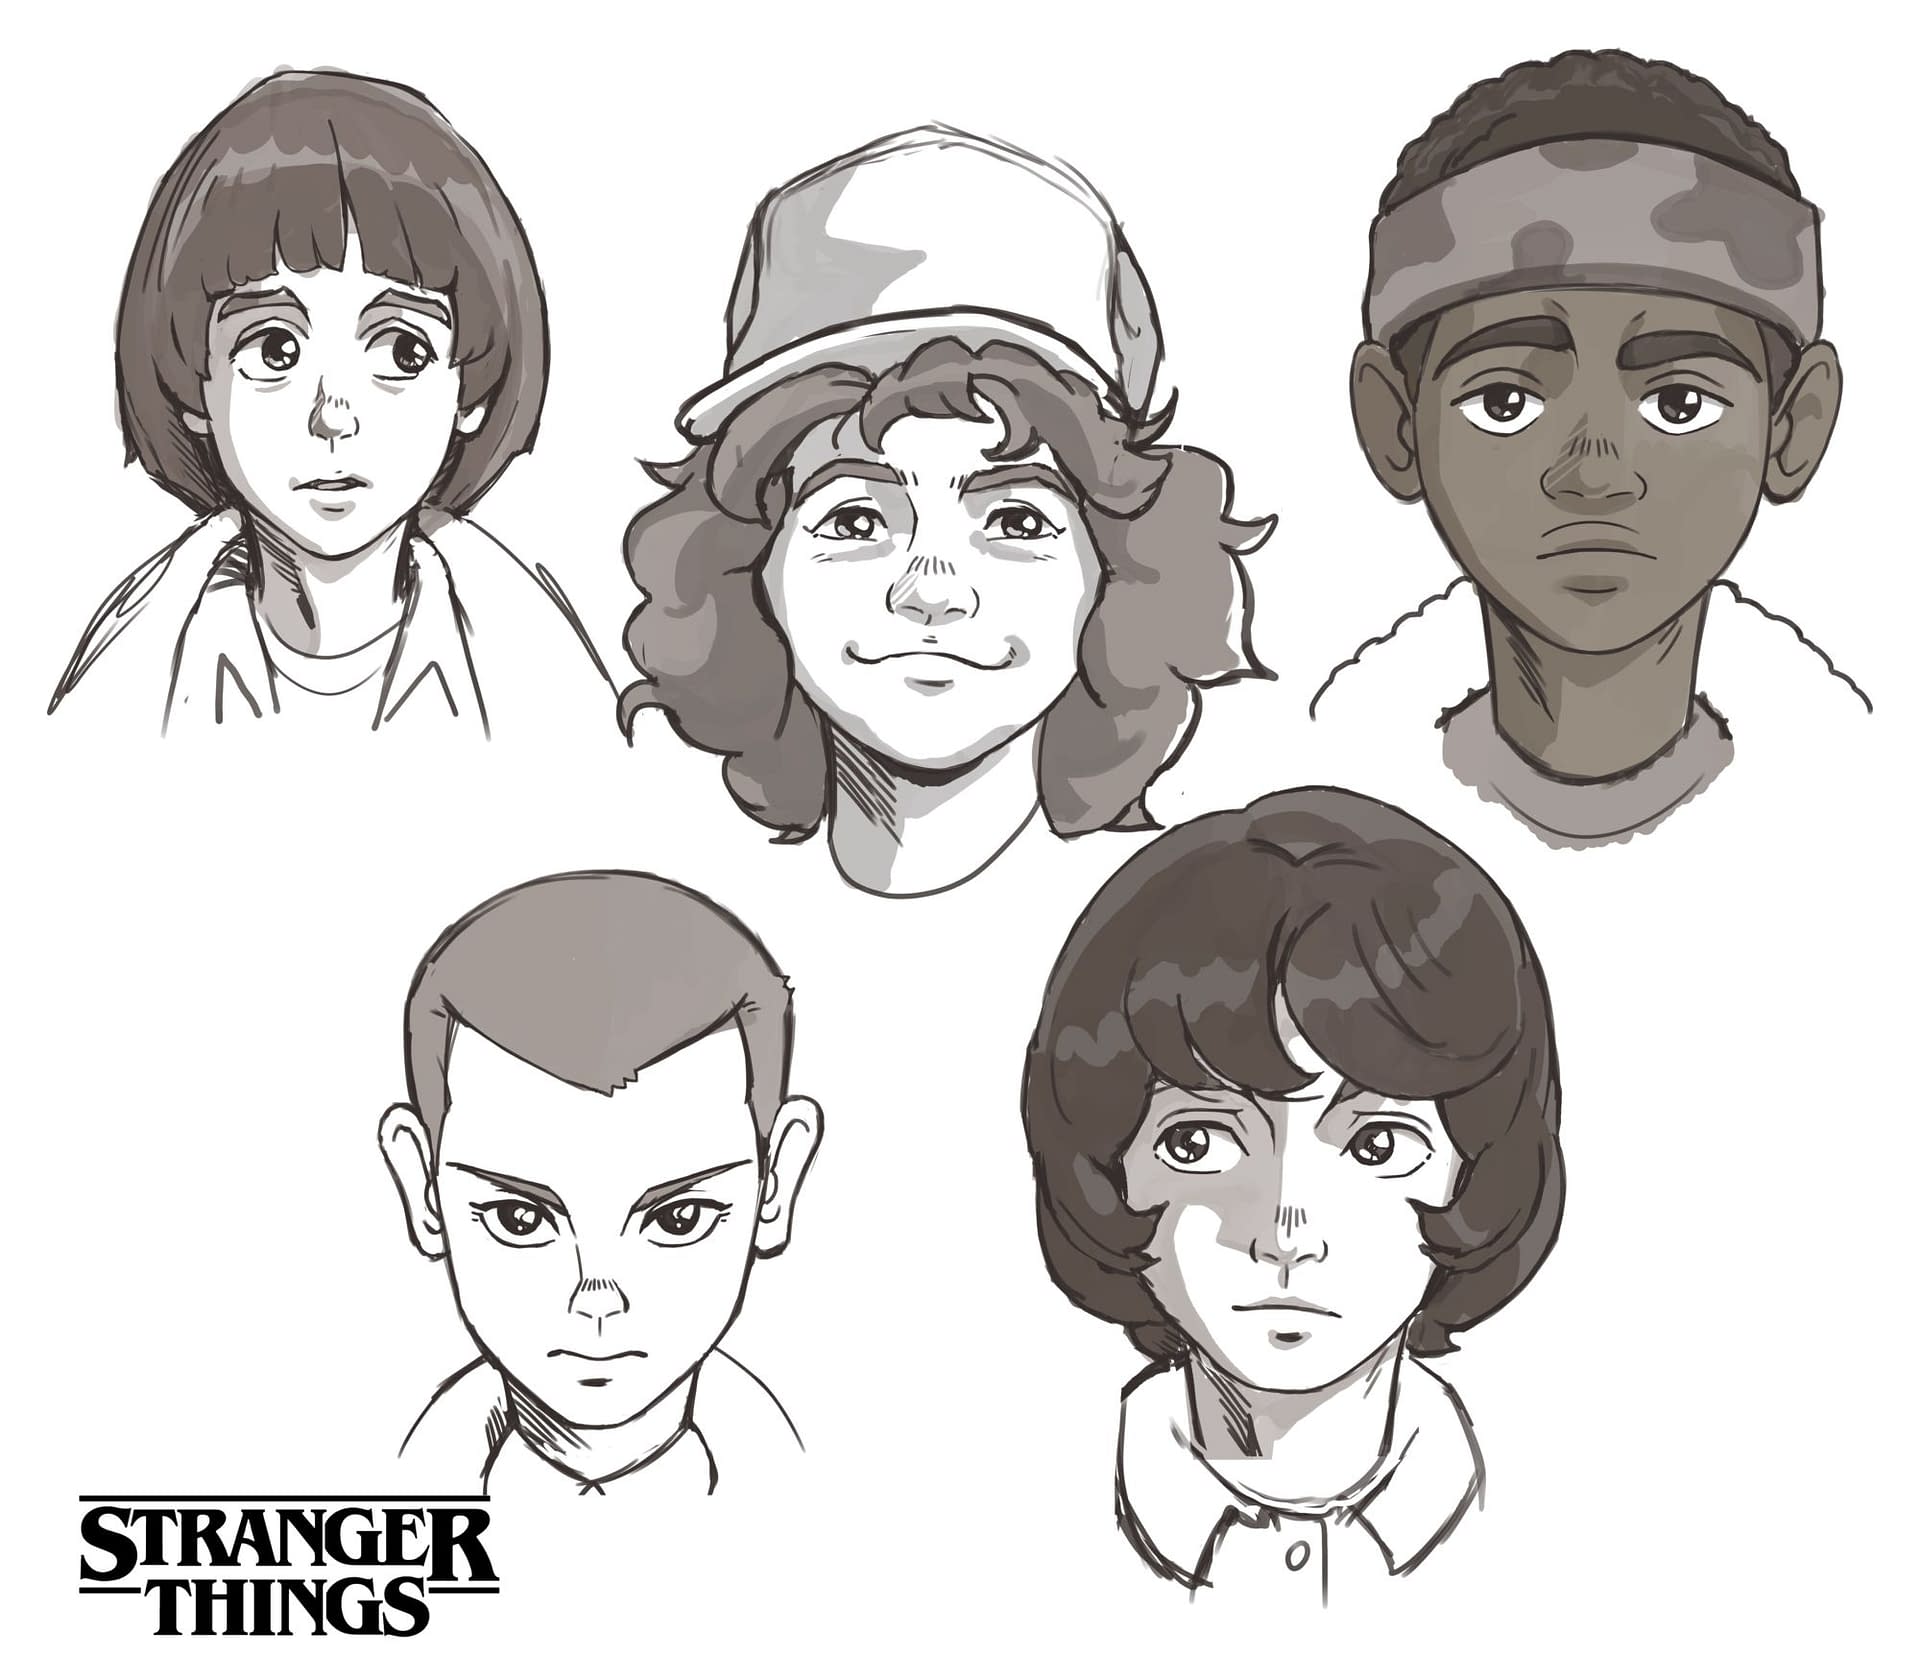 "Stranger Things": Fates' Jesse Norton on Making That 80's Anime Fan Trailer [VIDEO]